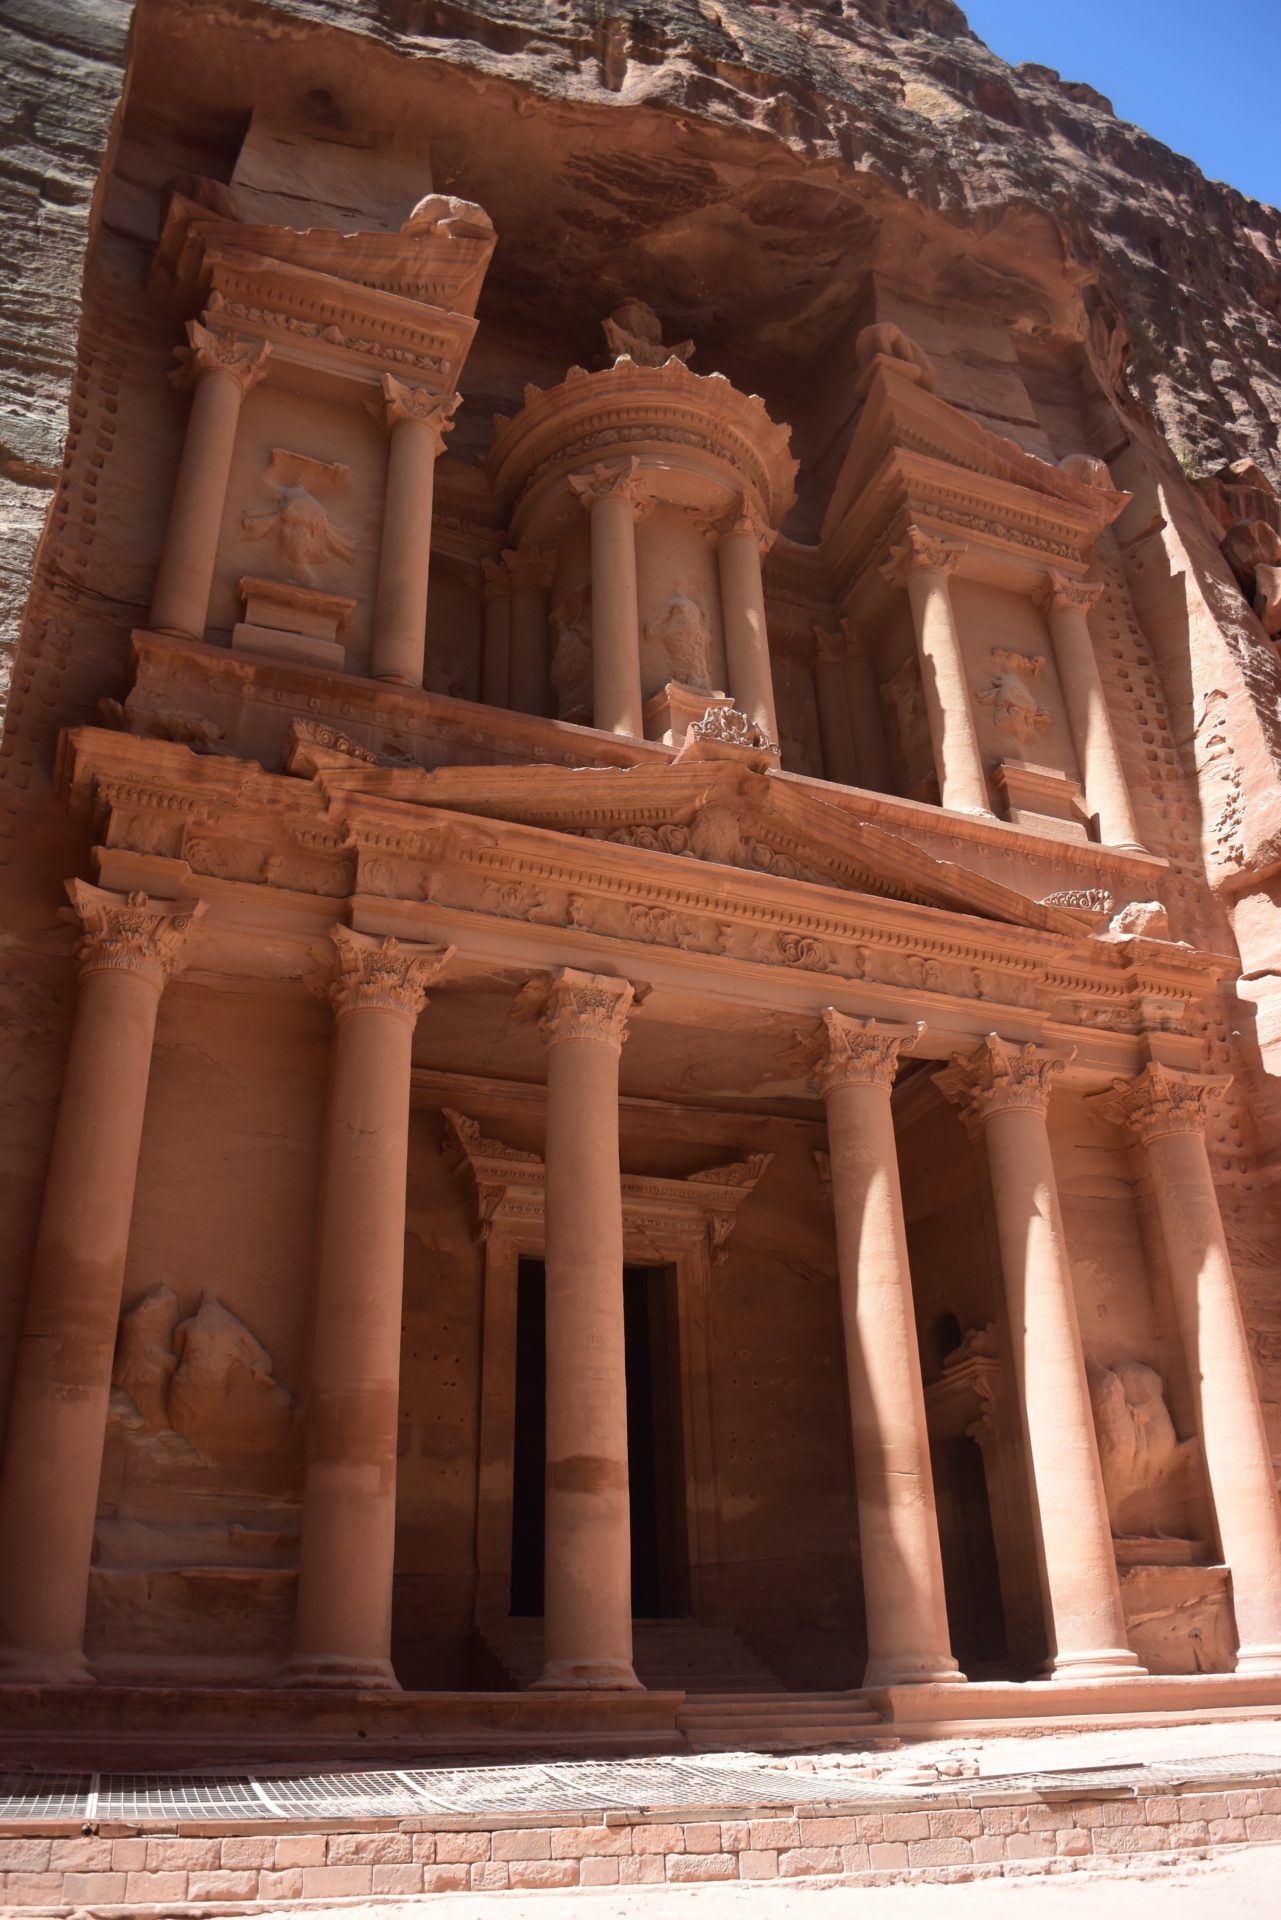 Petra with columns and pillars